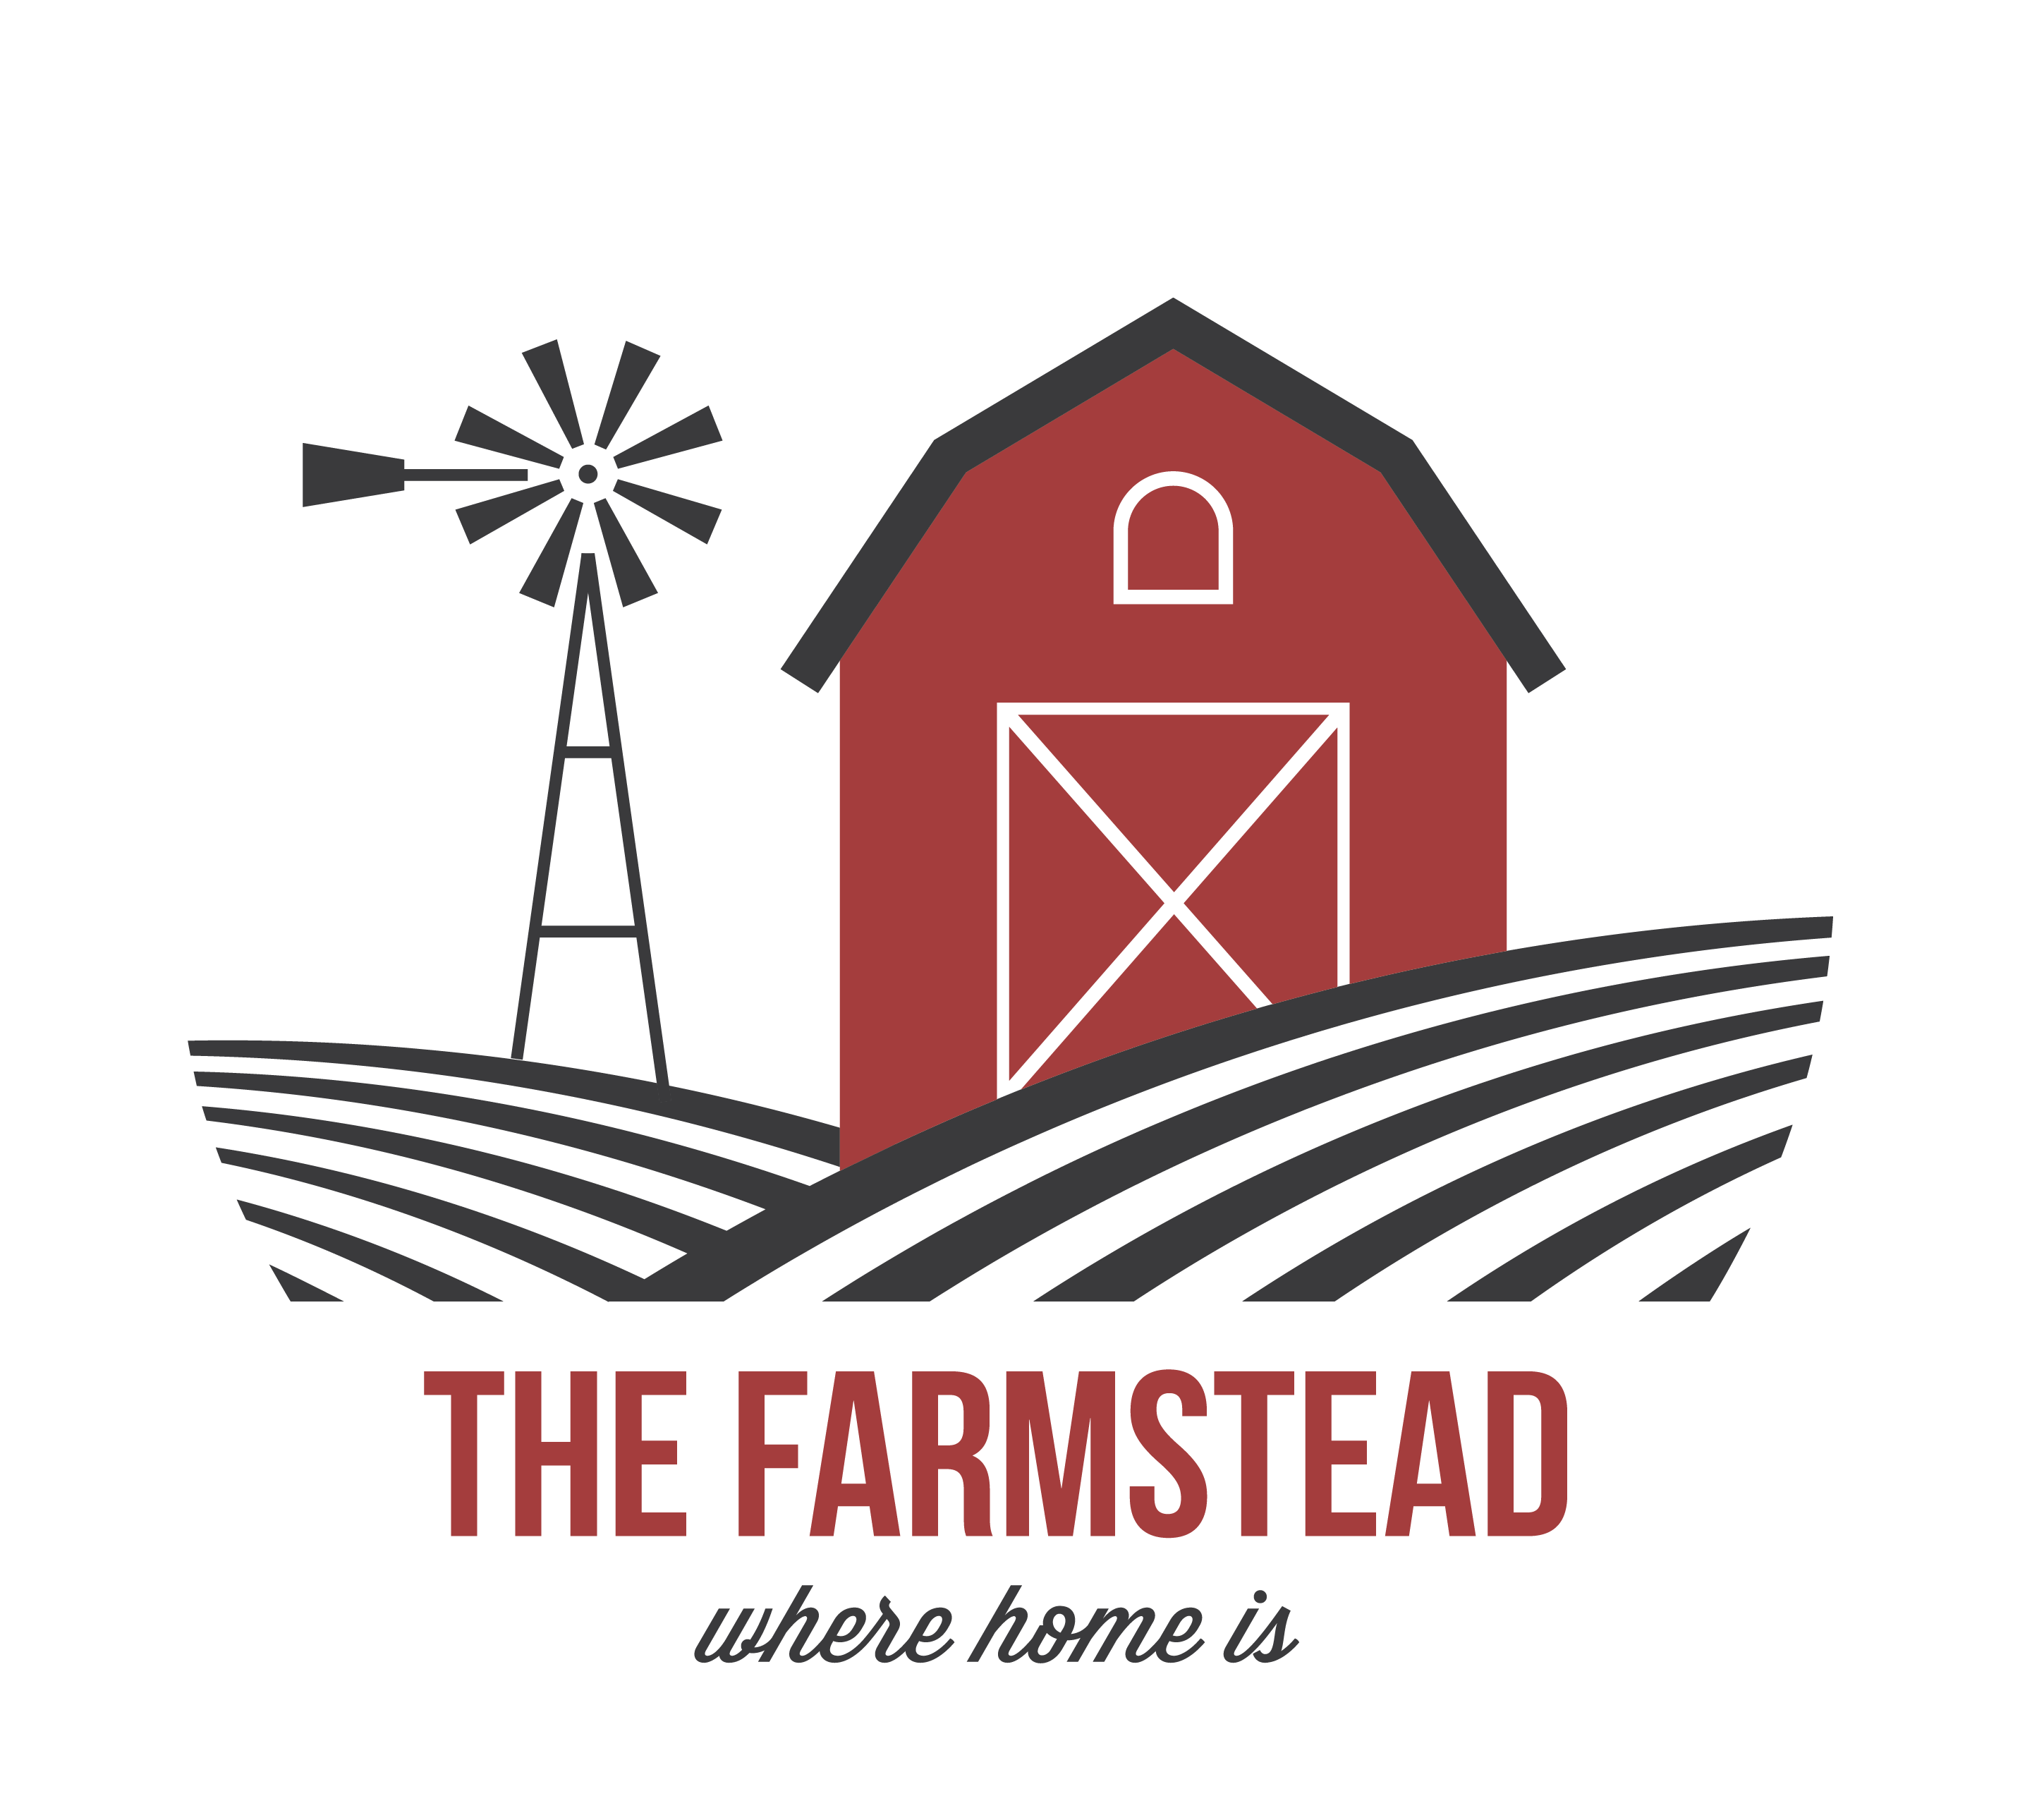 Farmstead Logo - The Farmstead to host ceremonial “wall-breaking” to kick off ...